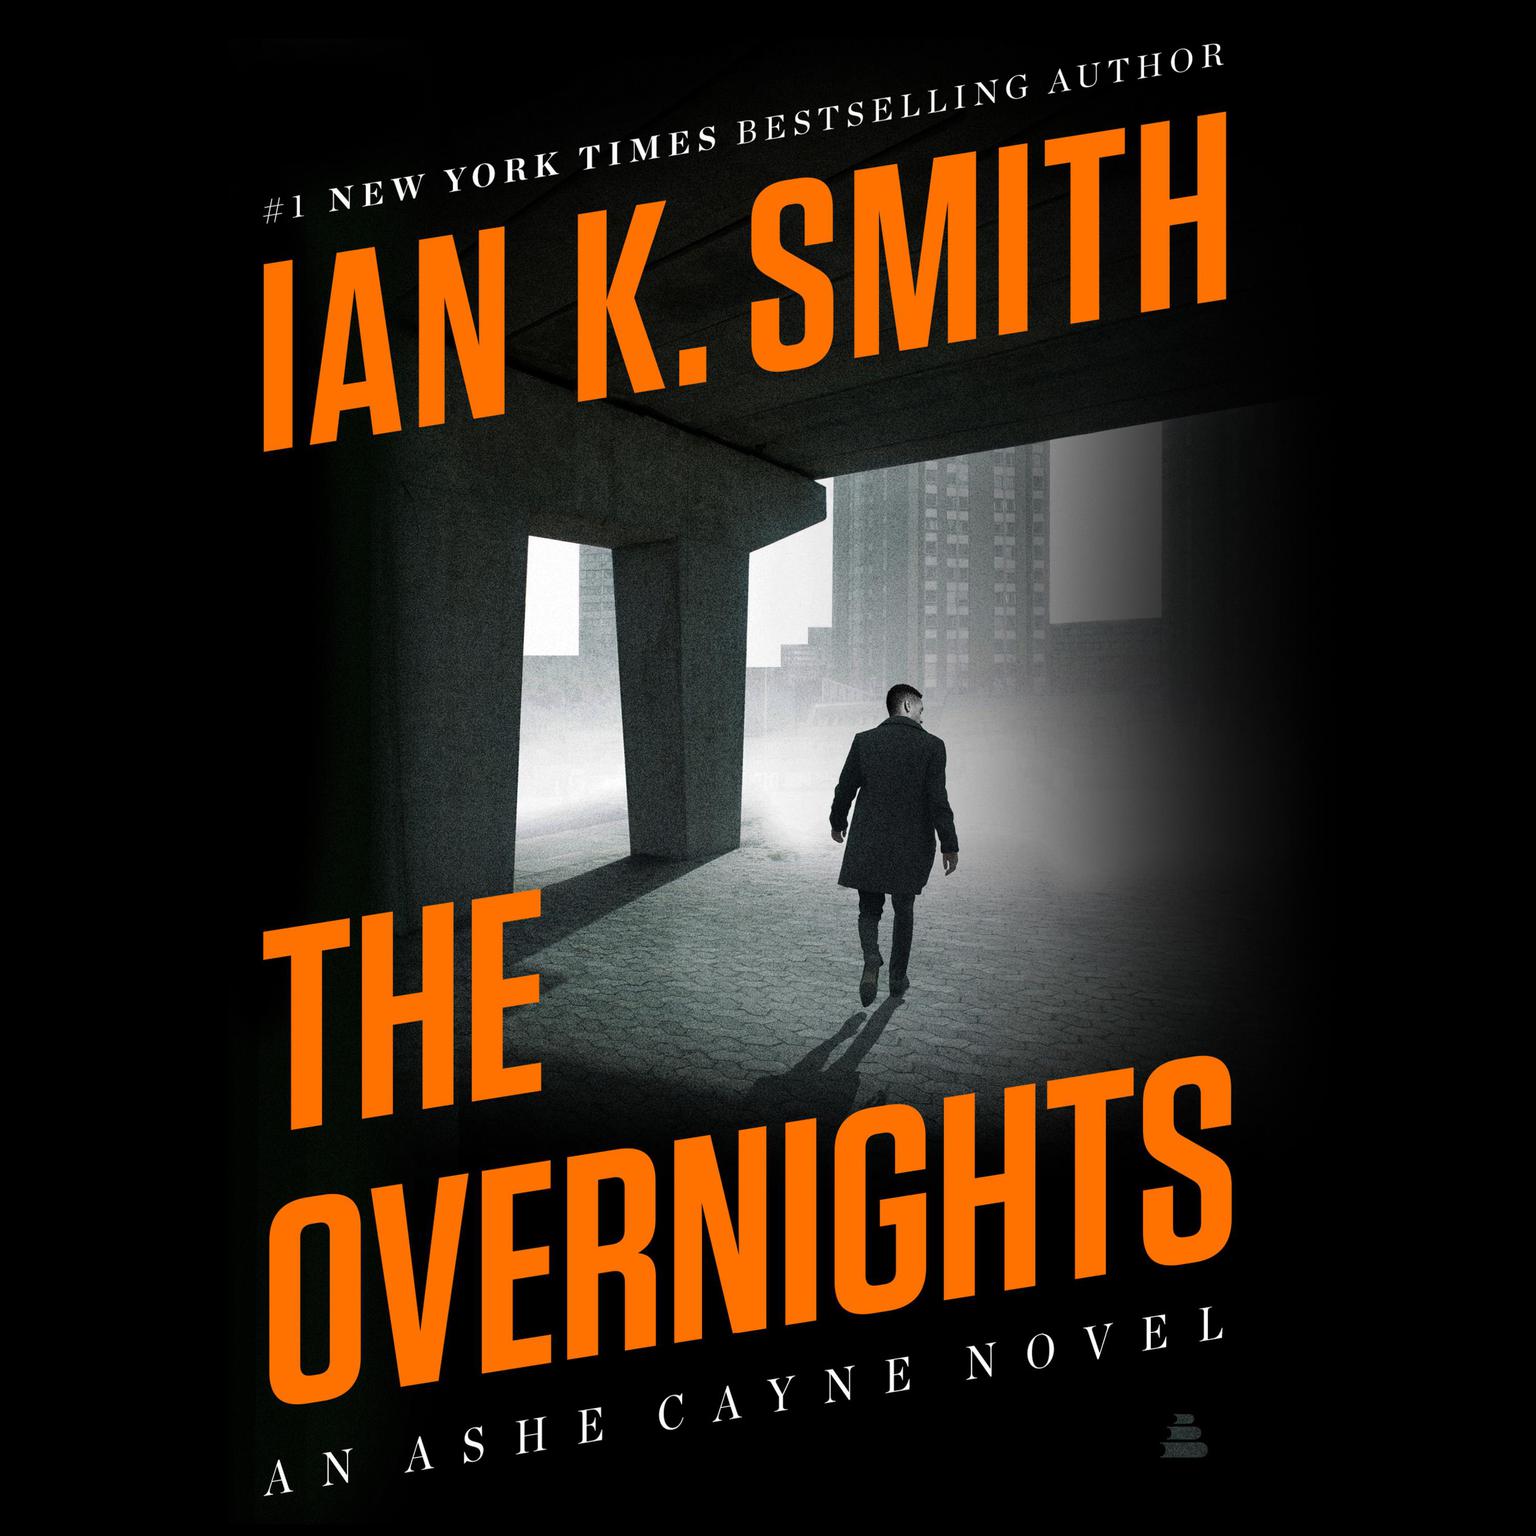 The Overnights: An Ashe Cayne Novel, Book 3 Audiobook, by Ian K. Smith